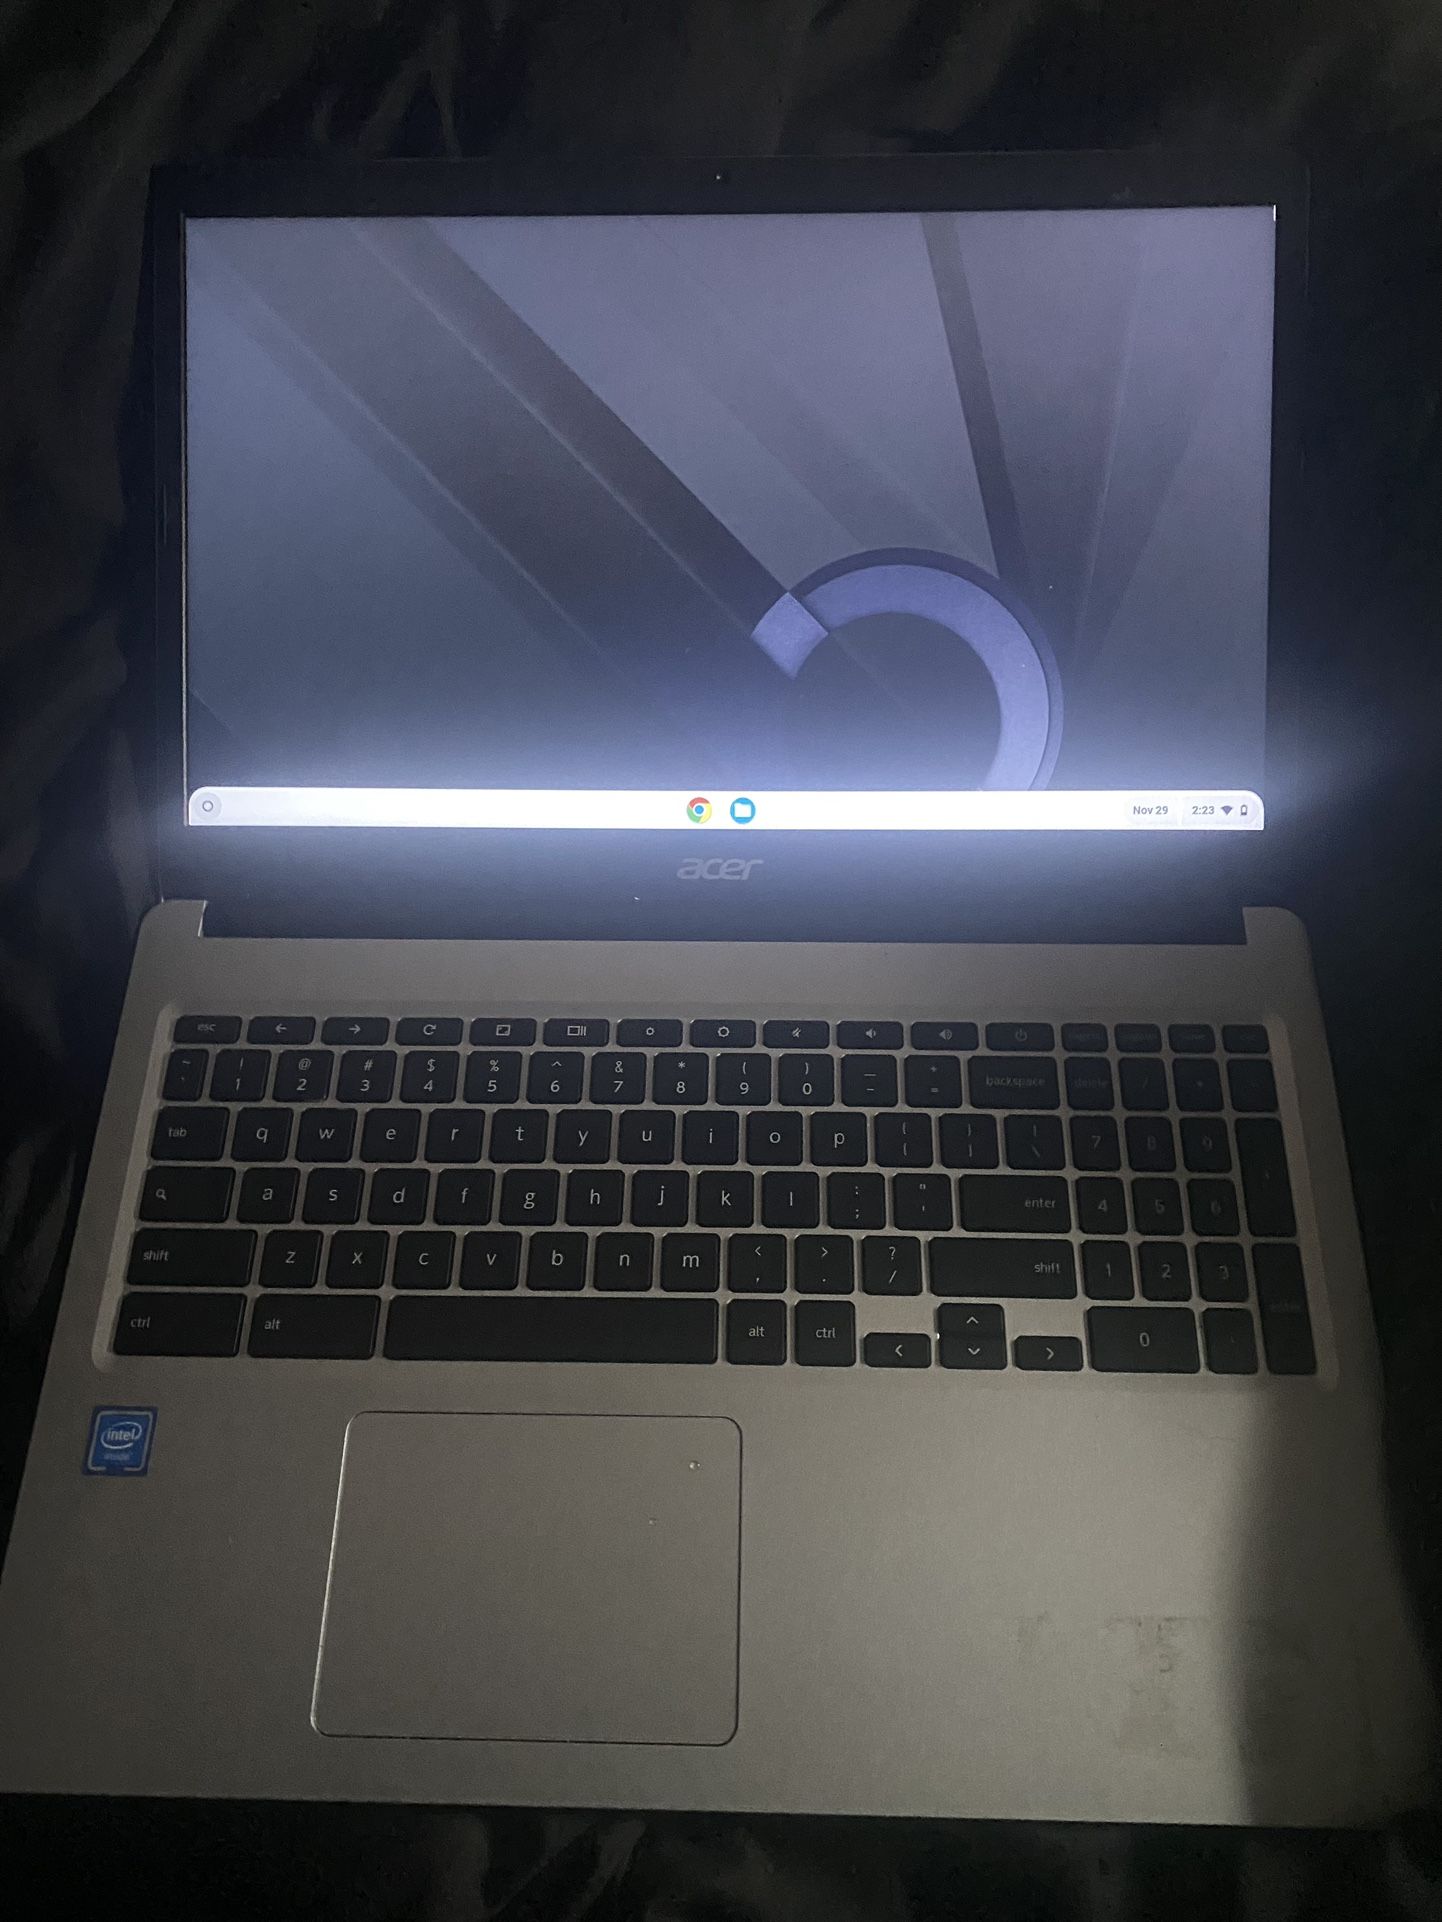 Acer Chrome Laptop